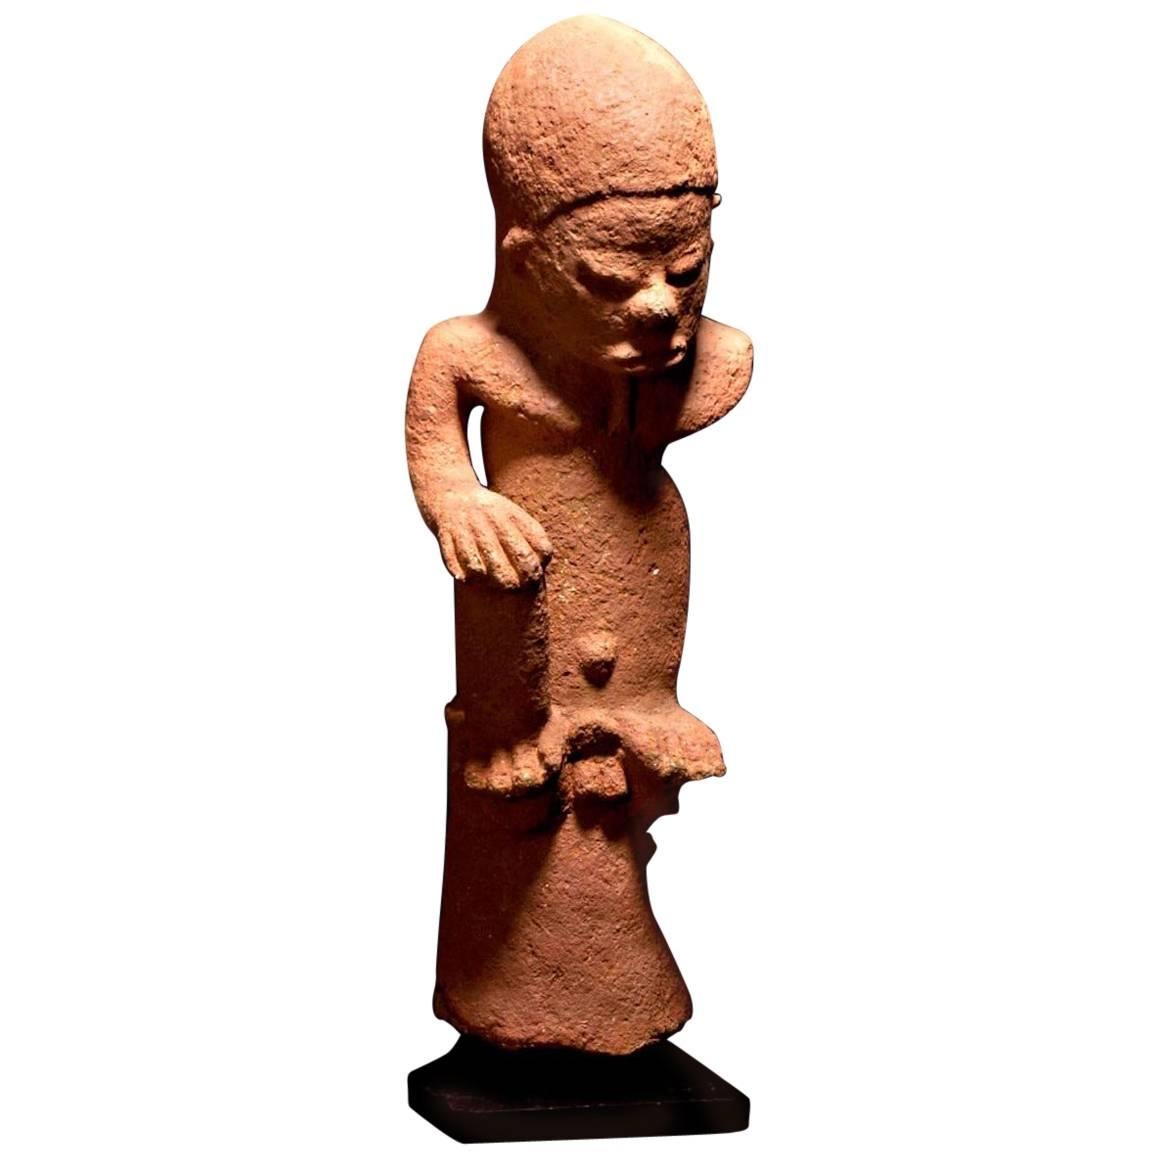 Djenné-Djenno Terracotta Pillar, Mali, Africa 600 AD